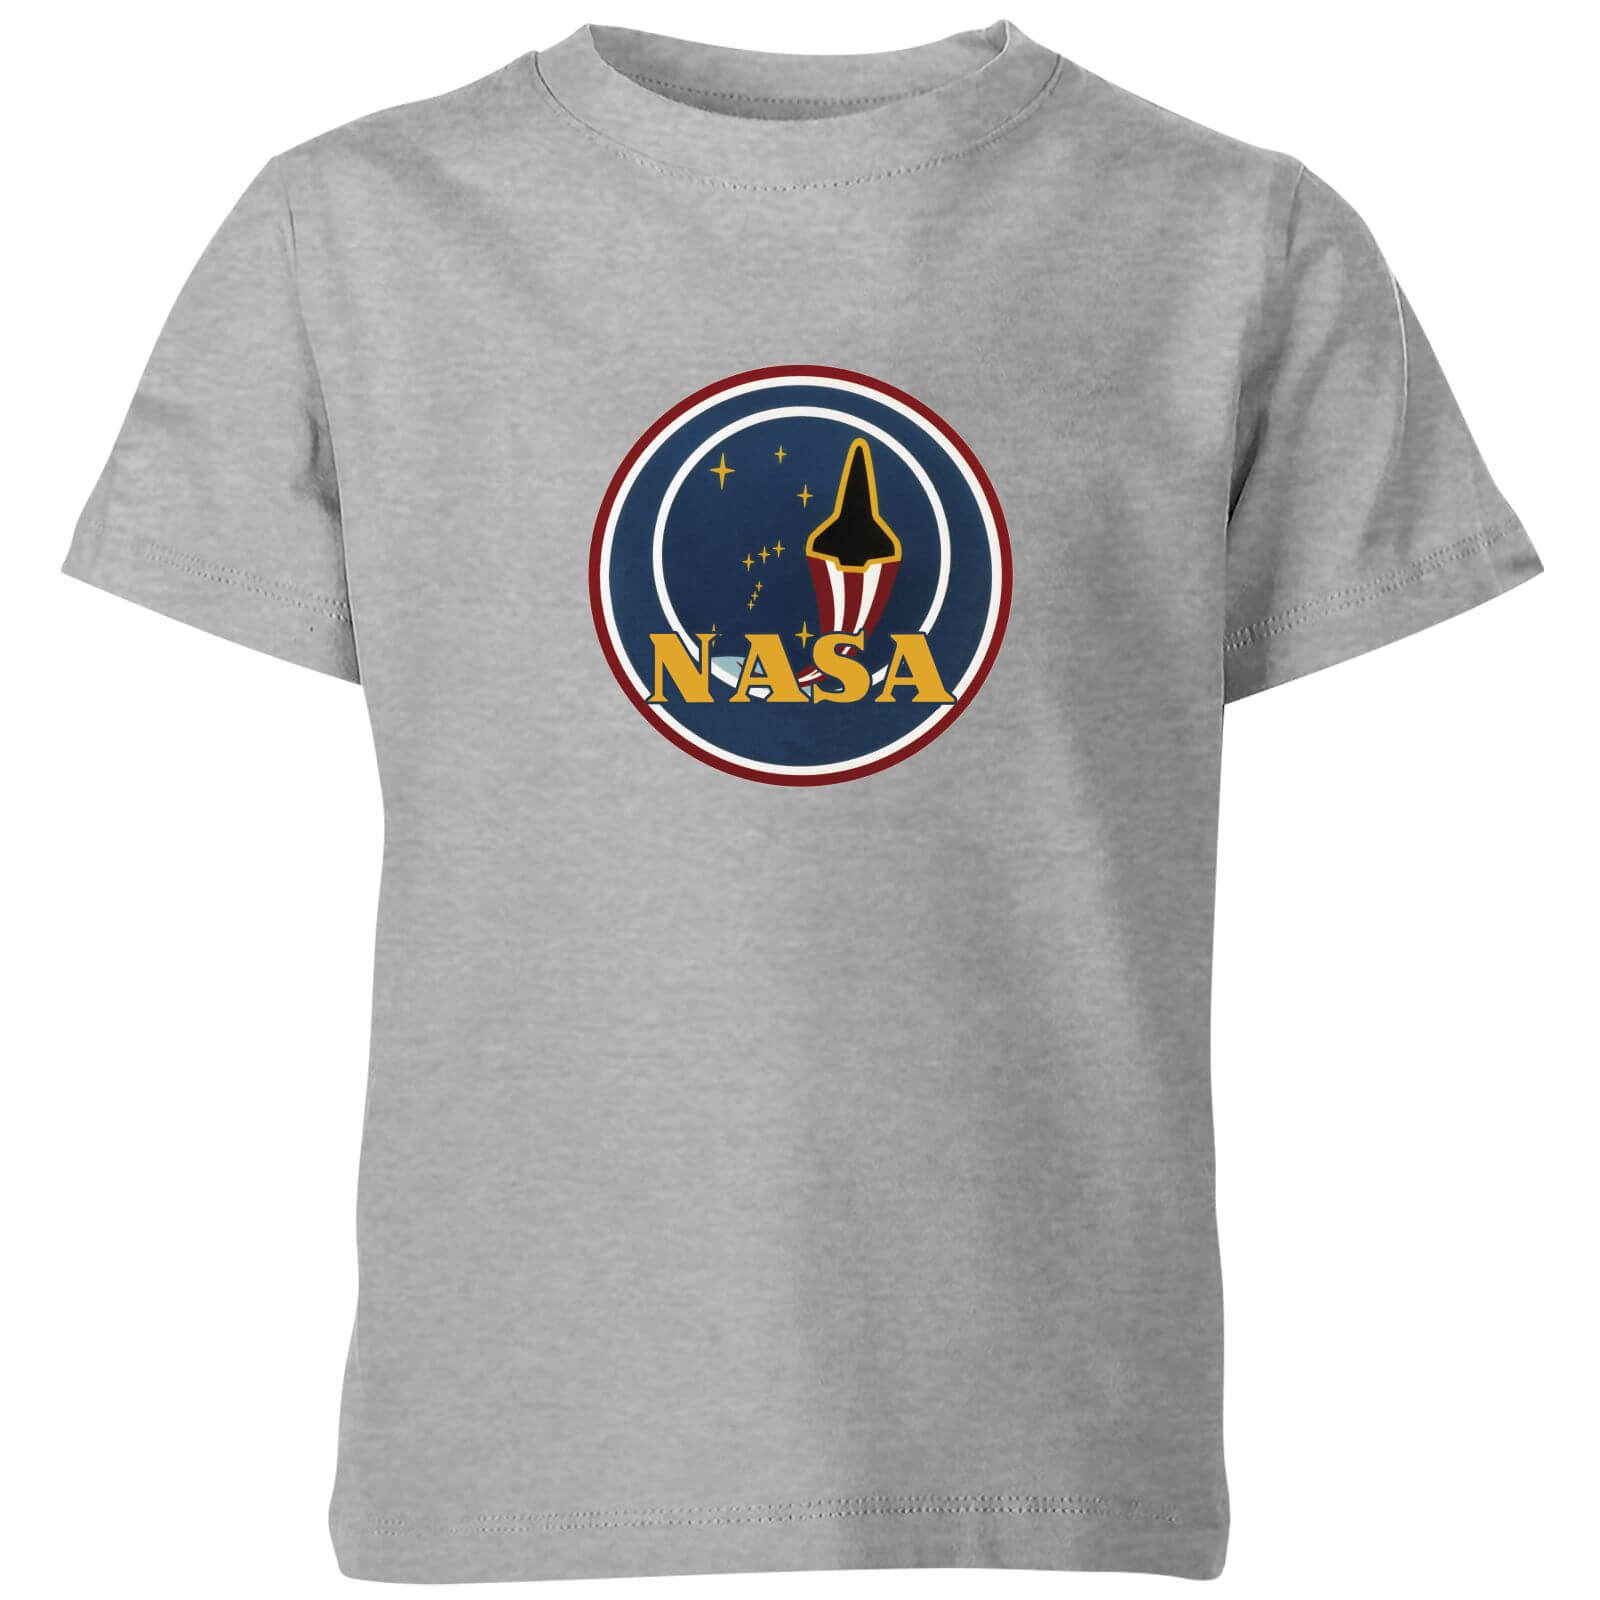 NASA JM Patch Kids' T-Shirt - Grey - 3-4 Years